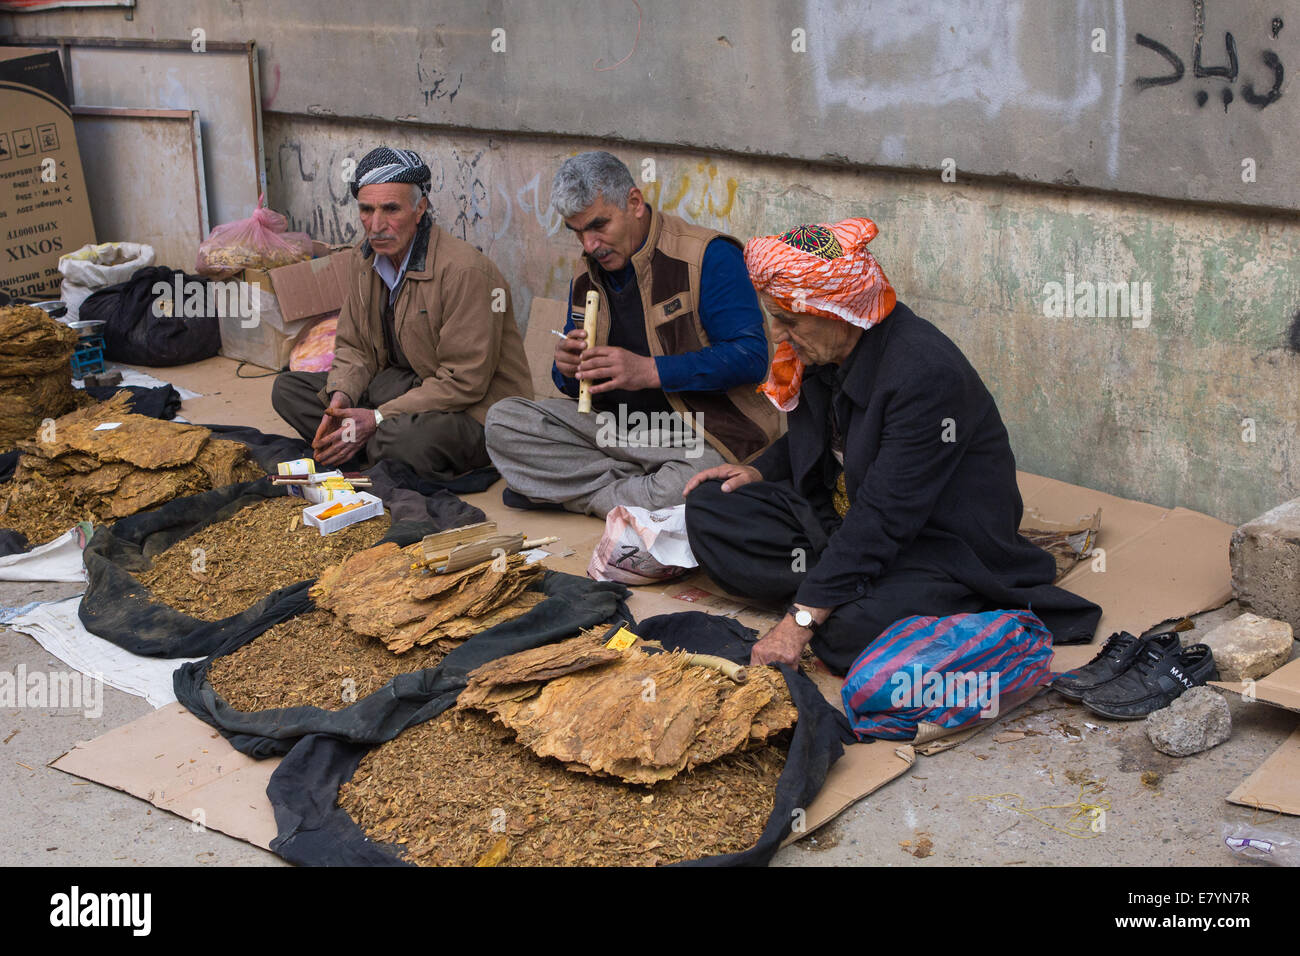 Kurdish street vendors wearing traditional clothing selling tobacco in Erbil (Arbil), Iraqi Kurdistan province, Iraq. Stock Photo